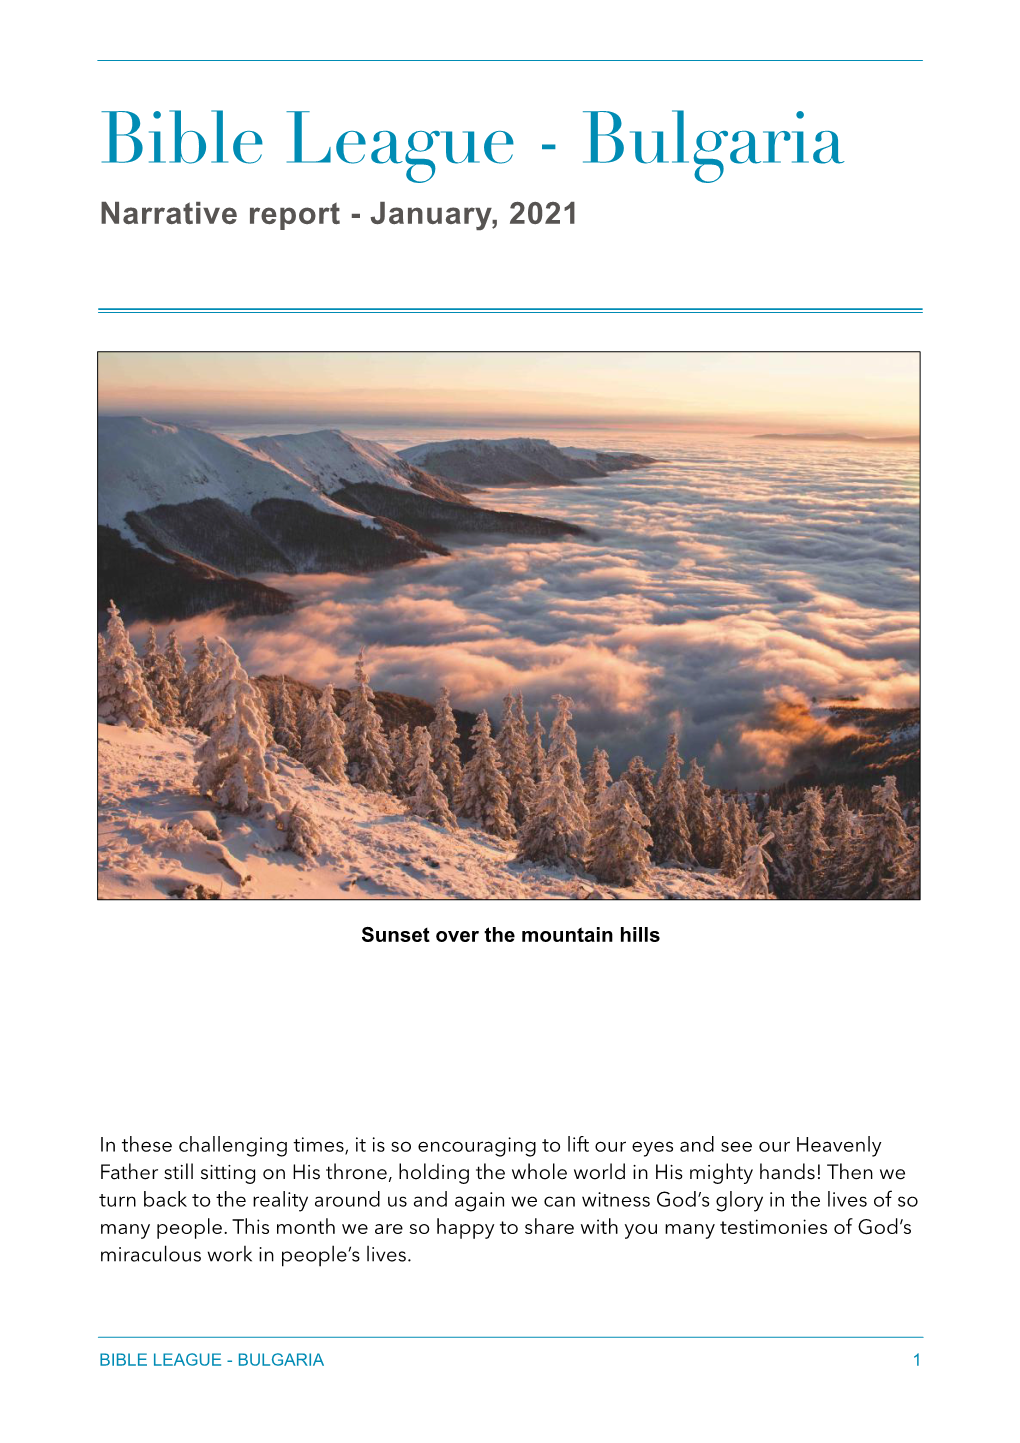 Bible League - Bulgaria Narrative Report - January, 2021